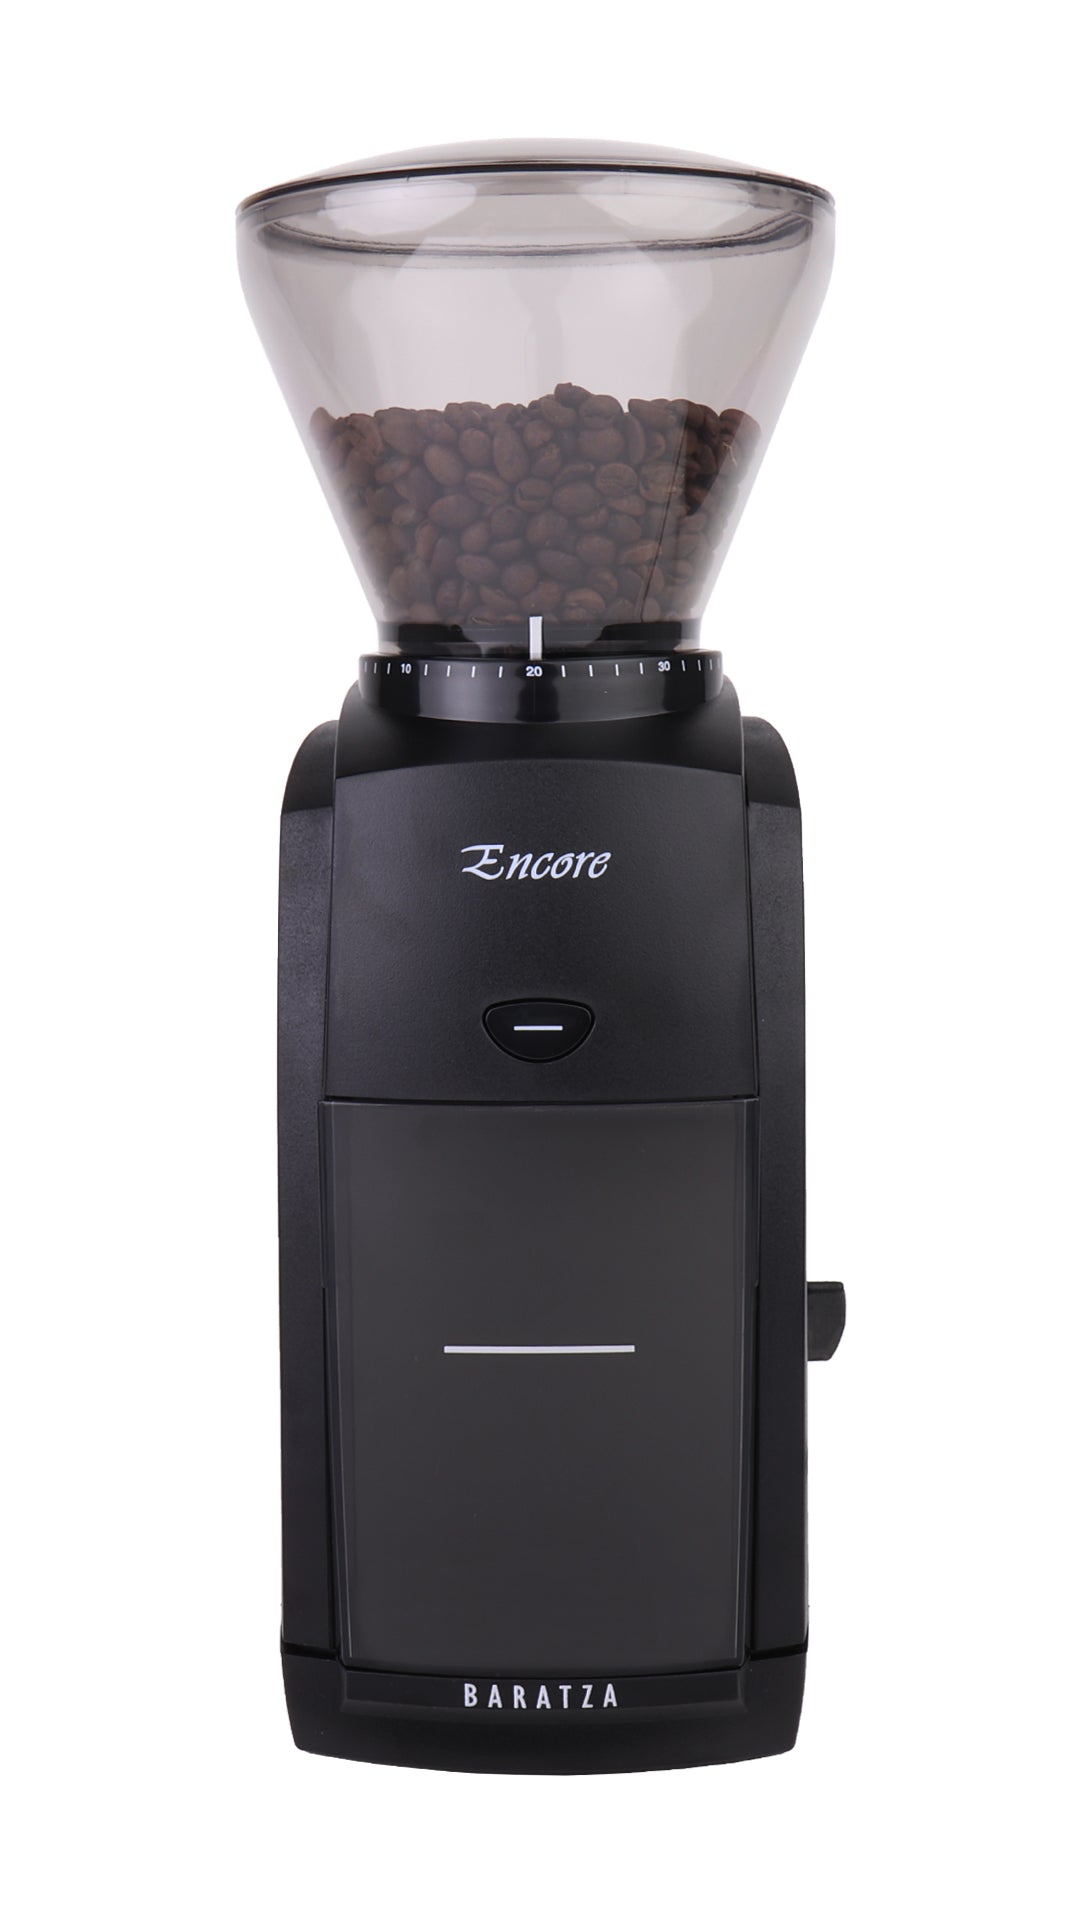 8-Cup Coffee Maker & Conical Burr Coffee Grinder Bundle